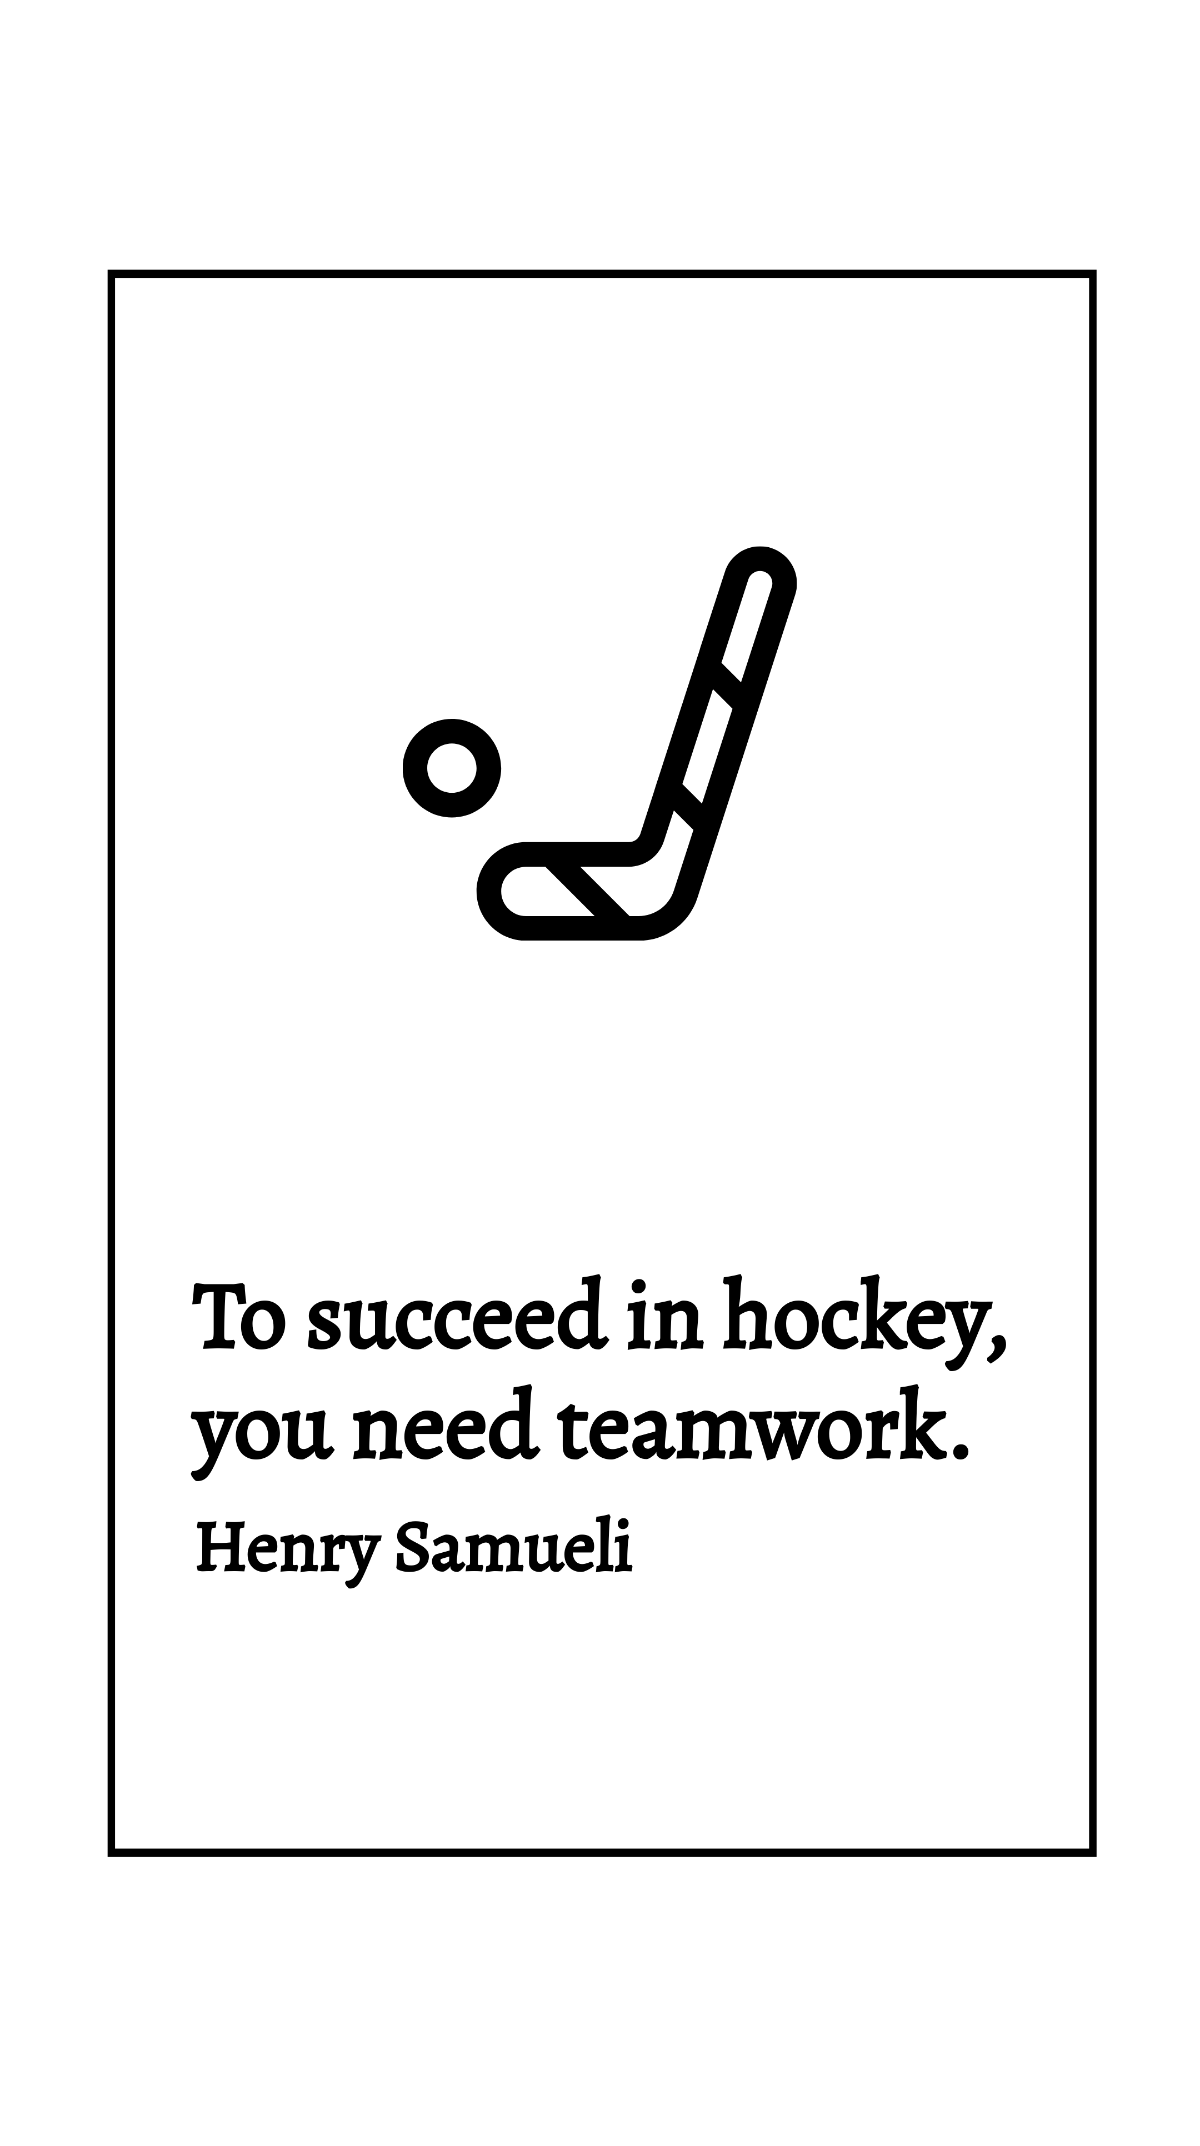 Henry Samueli - To succeed in hockey, you need teamwork.